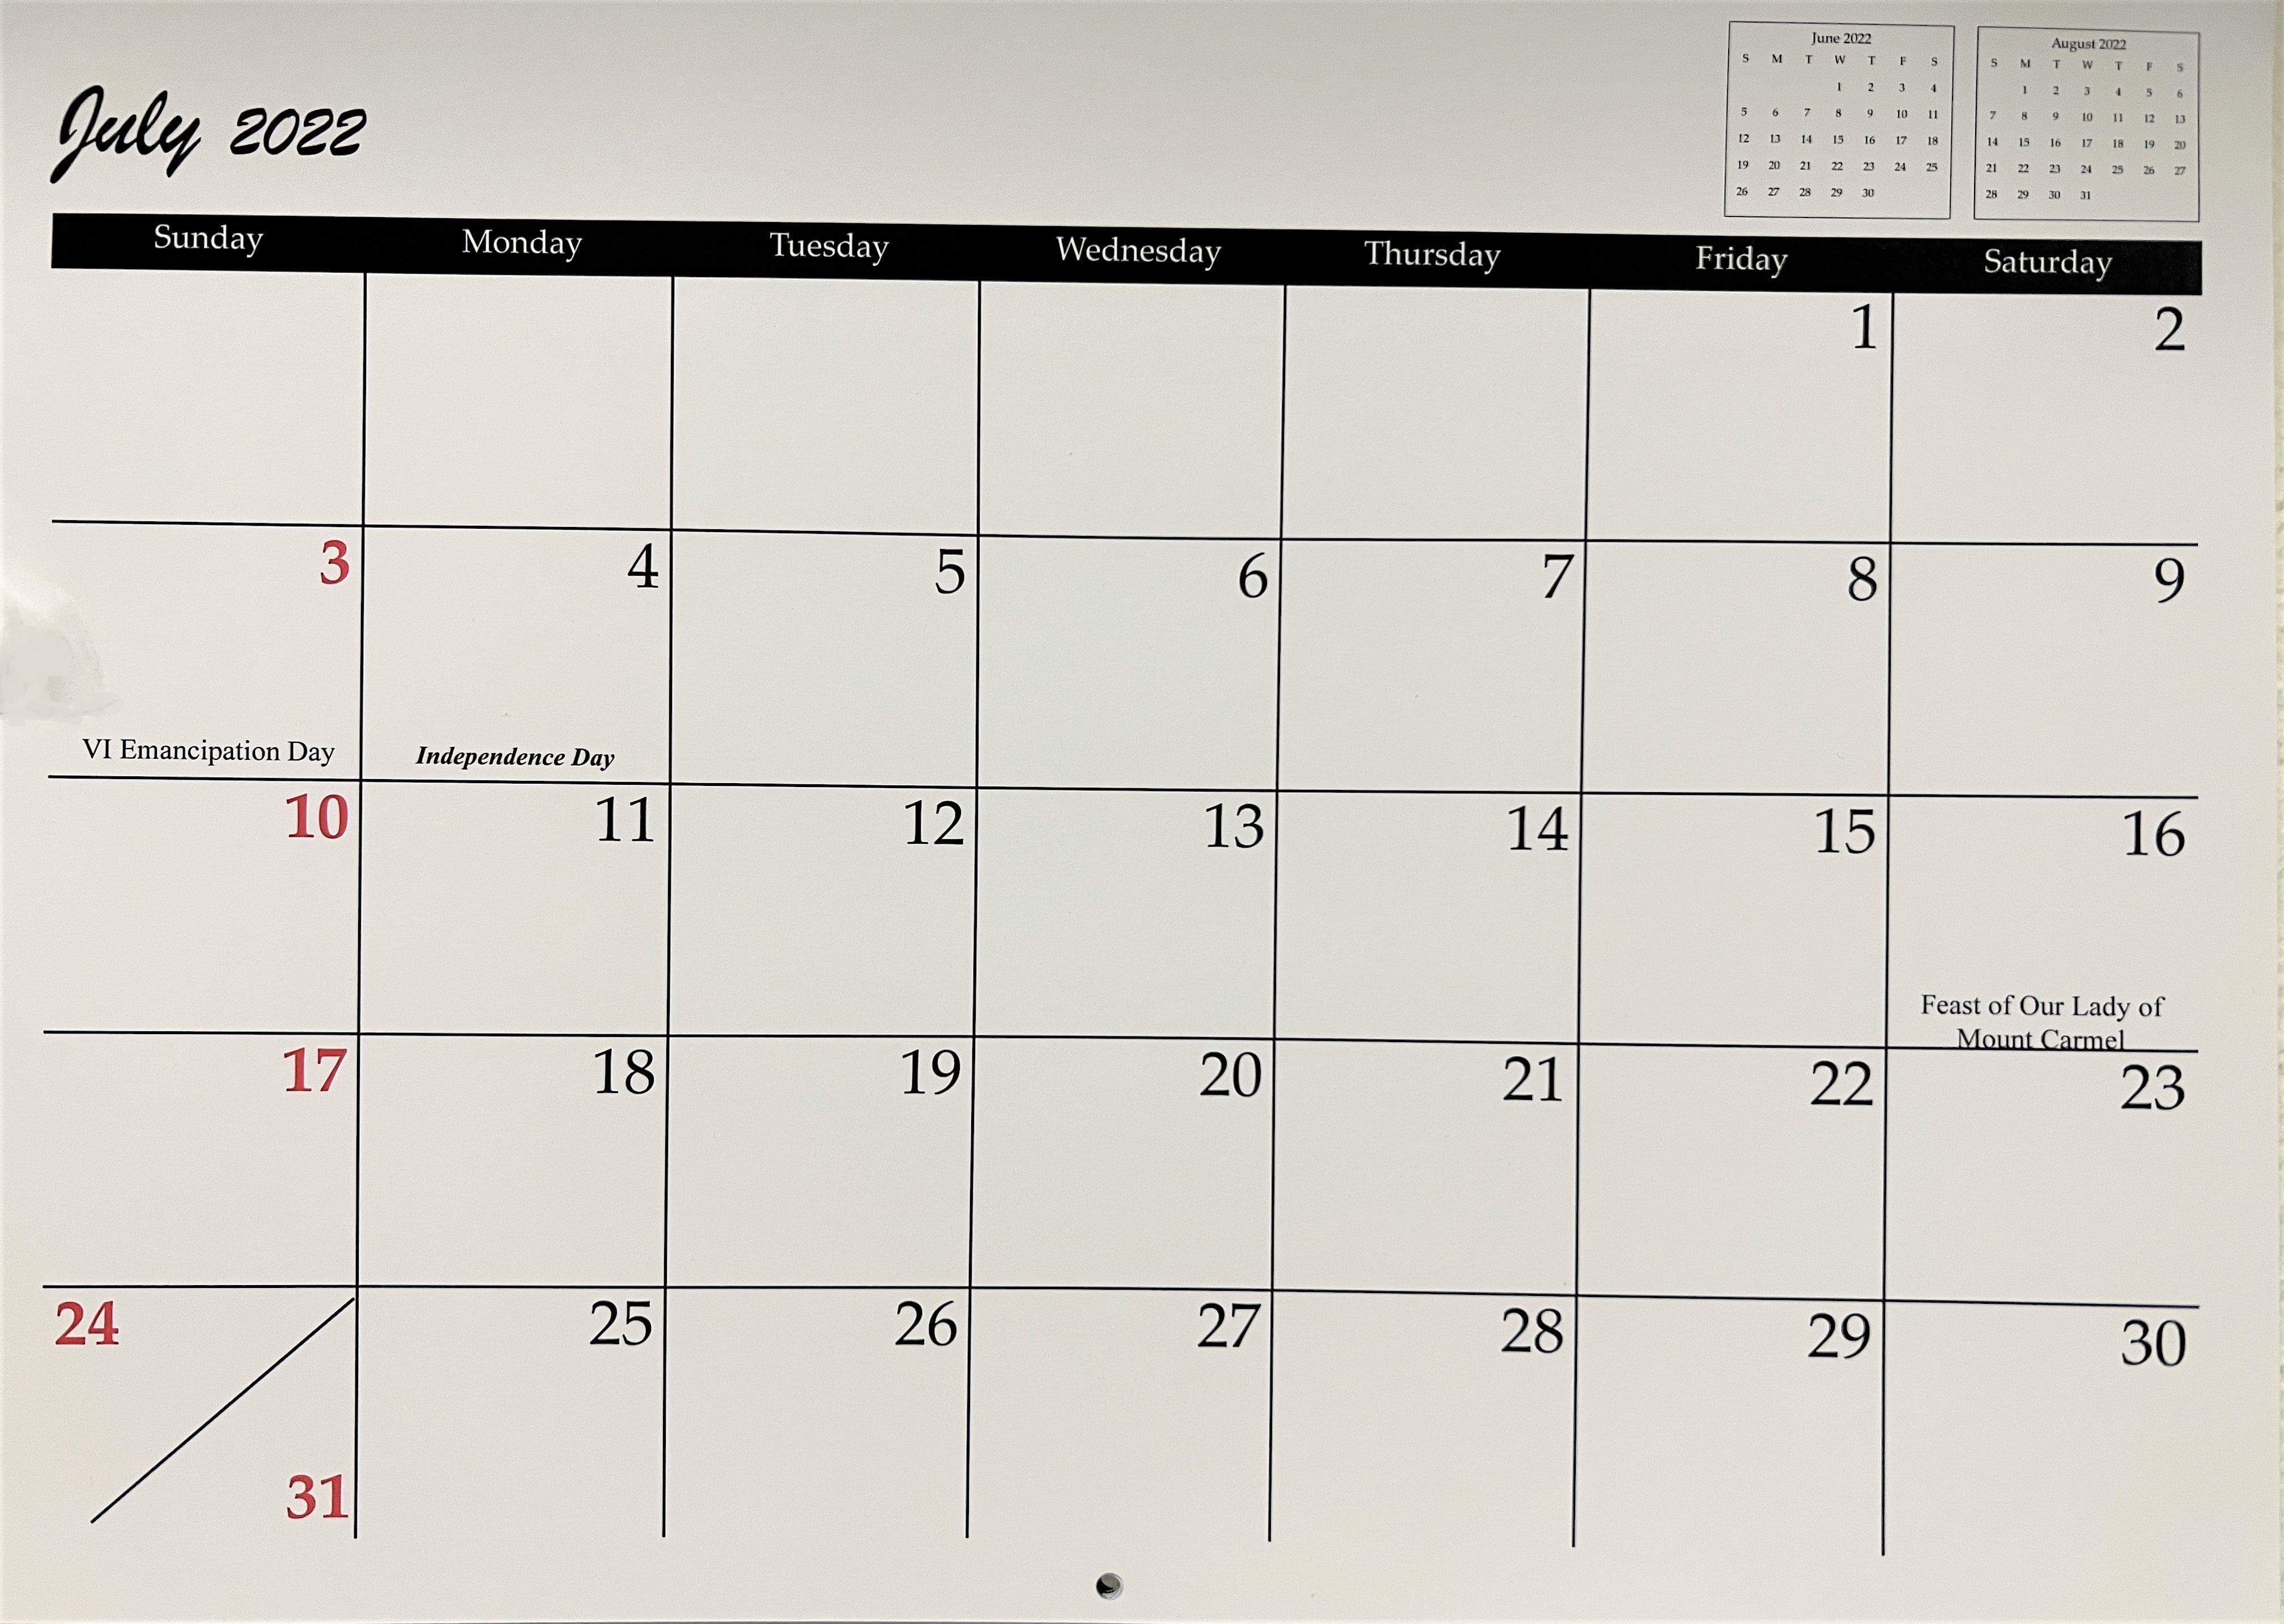 July 2022 calendar